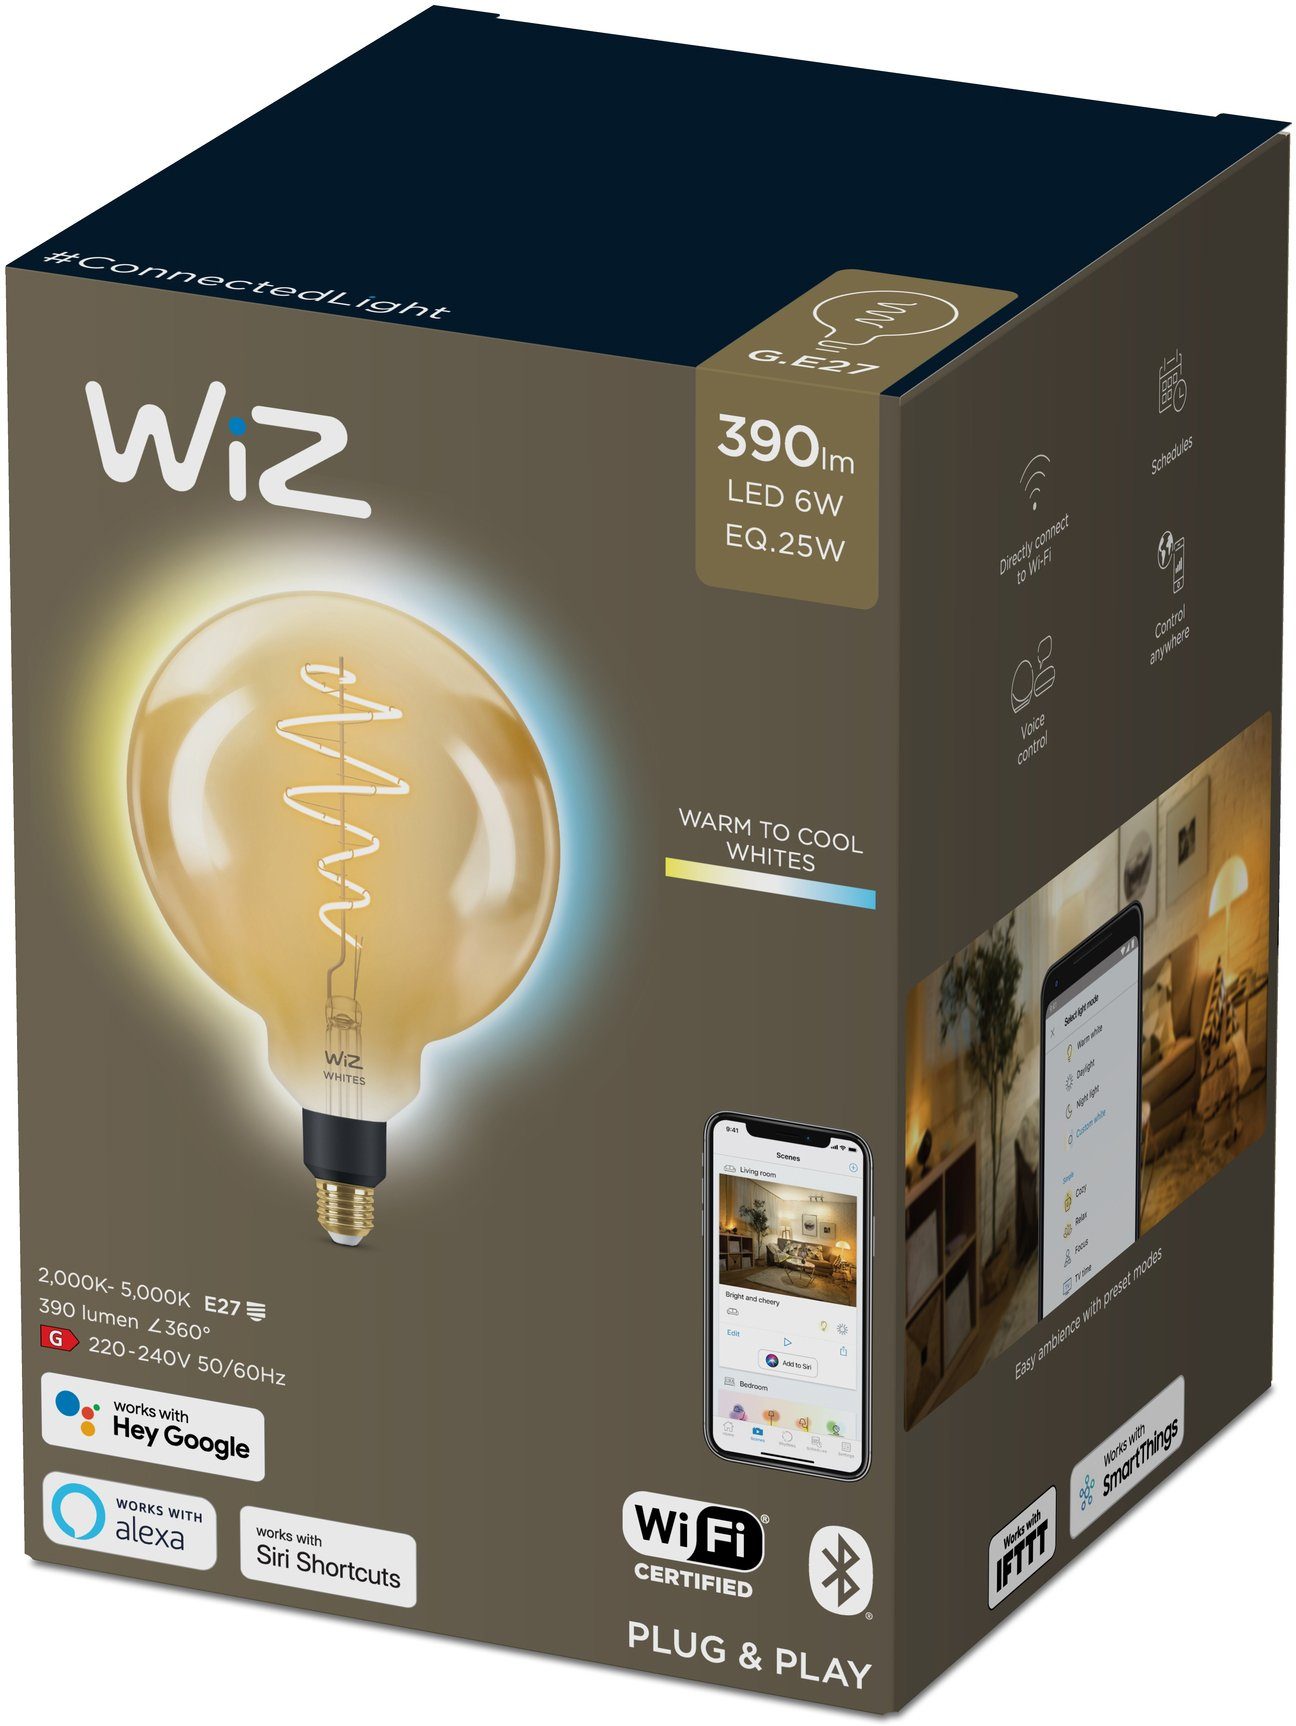 1 Amber LED E27 WiZ LED-Filament White E27, Vintage-Design XL-Globeform Filament für Filament Lampen klassisches Wiz G200 Tunable Einzelpack, 40W Warmweiß, St.,